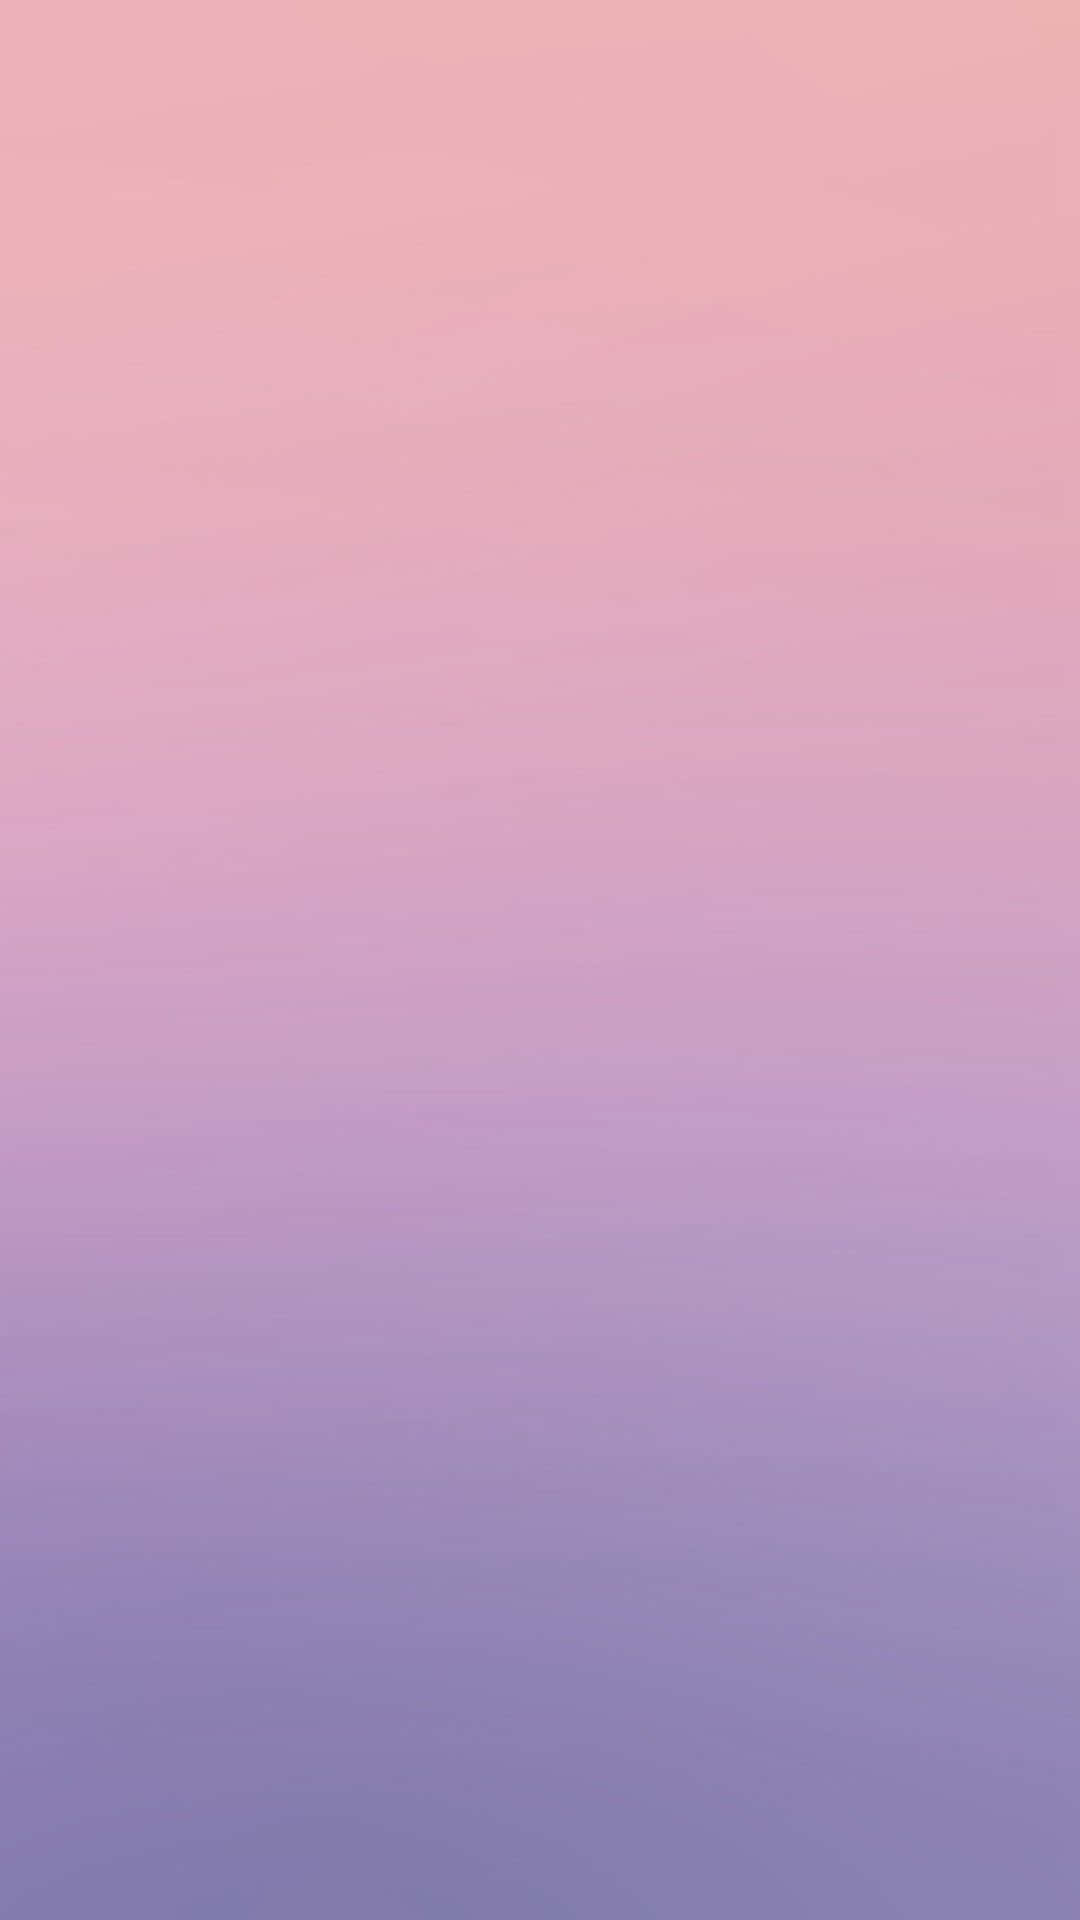 Unfondo Degradado En Tonos Rosados Y Púrpuras Fondo de pantalla